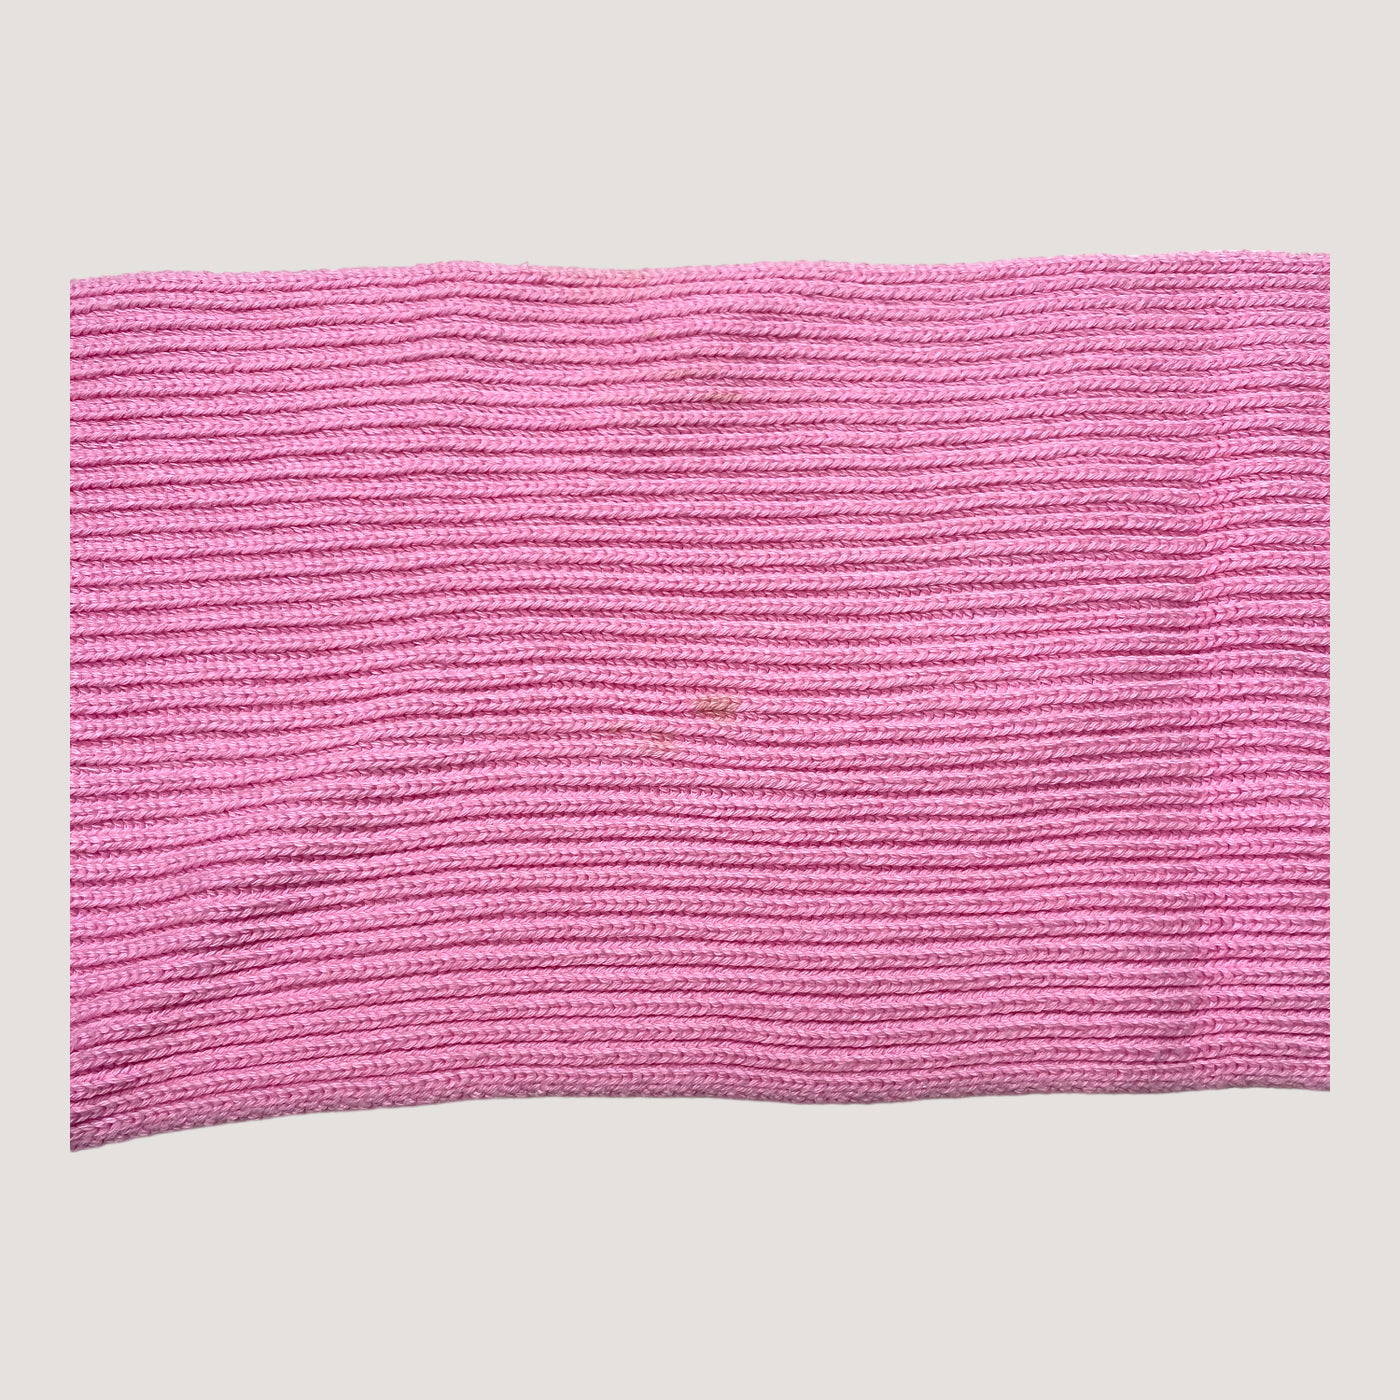 Gugguu beanie & scarf set, salmon pink | 52/54cm